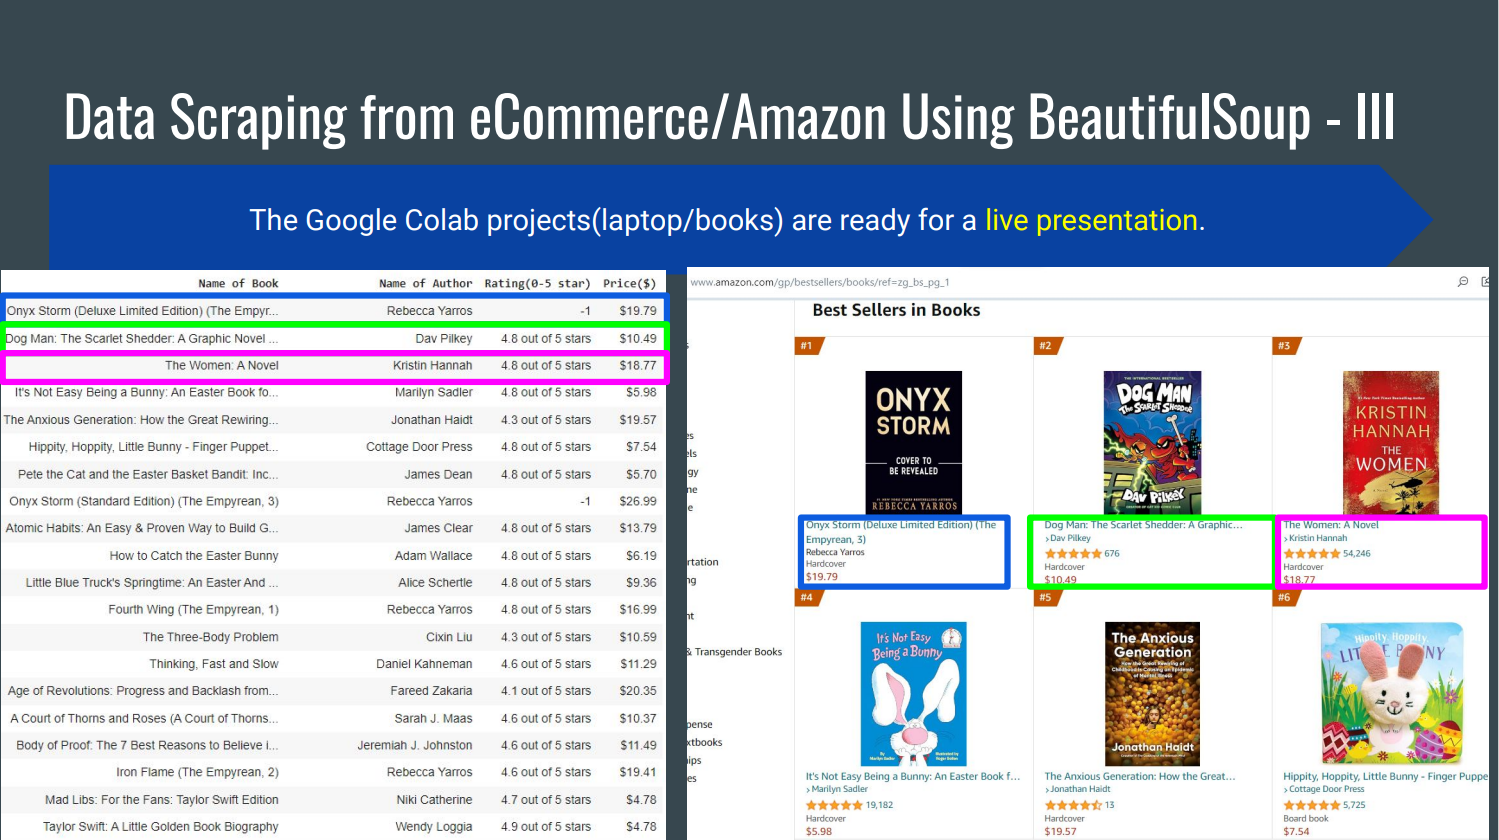 Data Scraping from eCommerce/Amazon Using BeautifulSoup - III